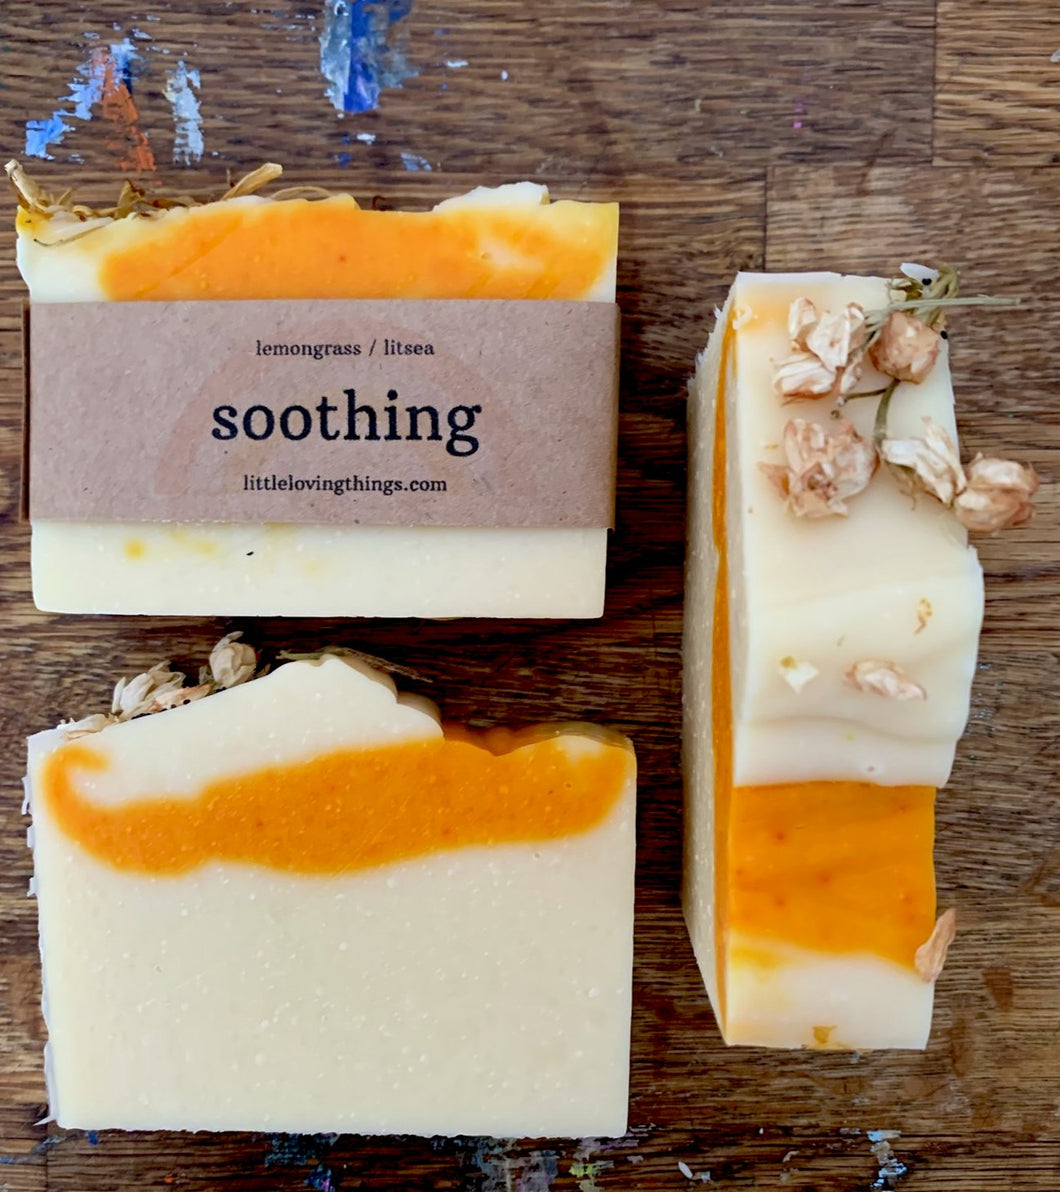 Soothing - Lemongrass / Litsea - Heartmade Artisan Soap